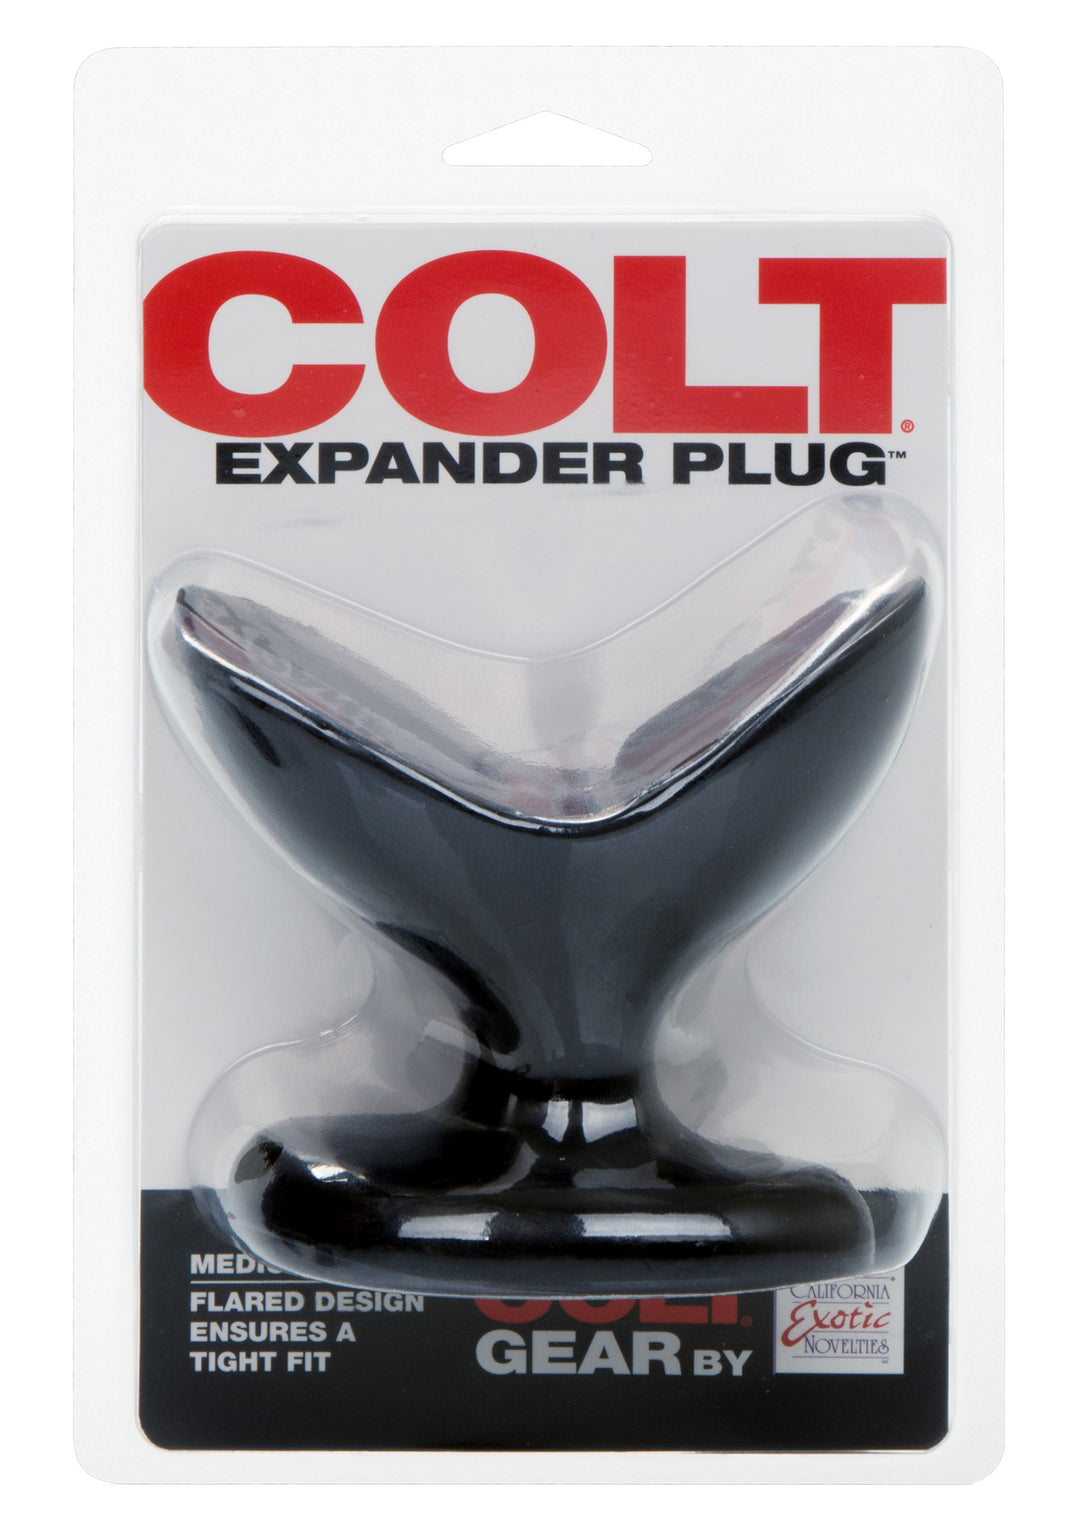 Medium expandable plug COLT Expander Plug - Medium